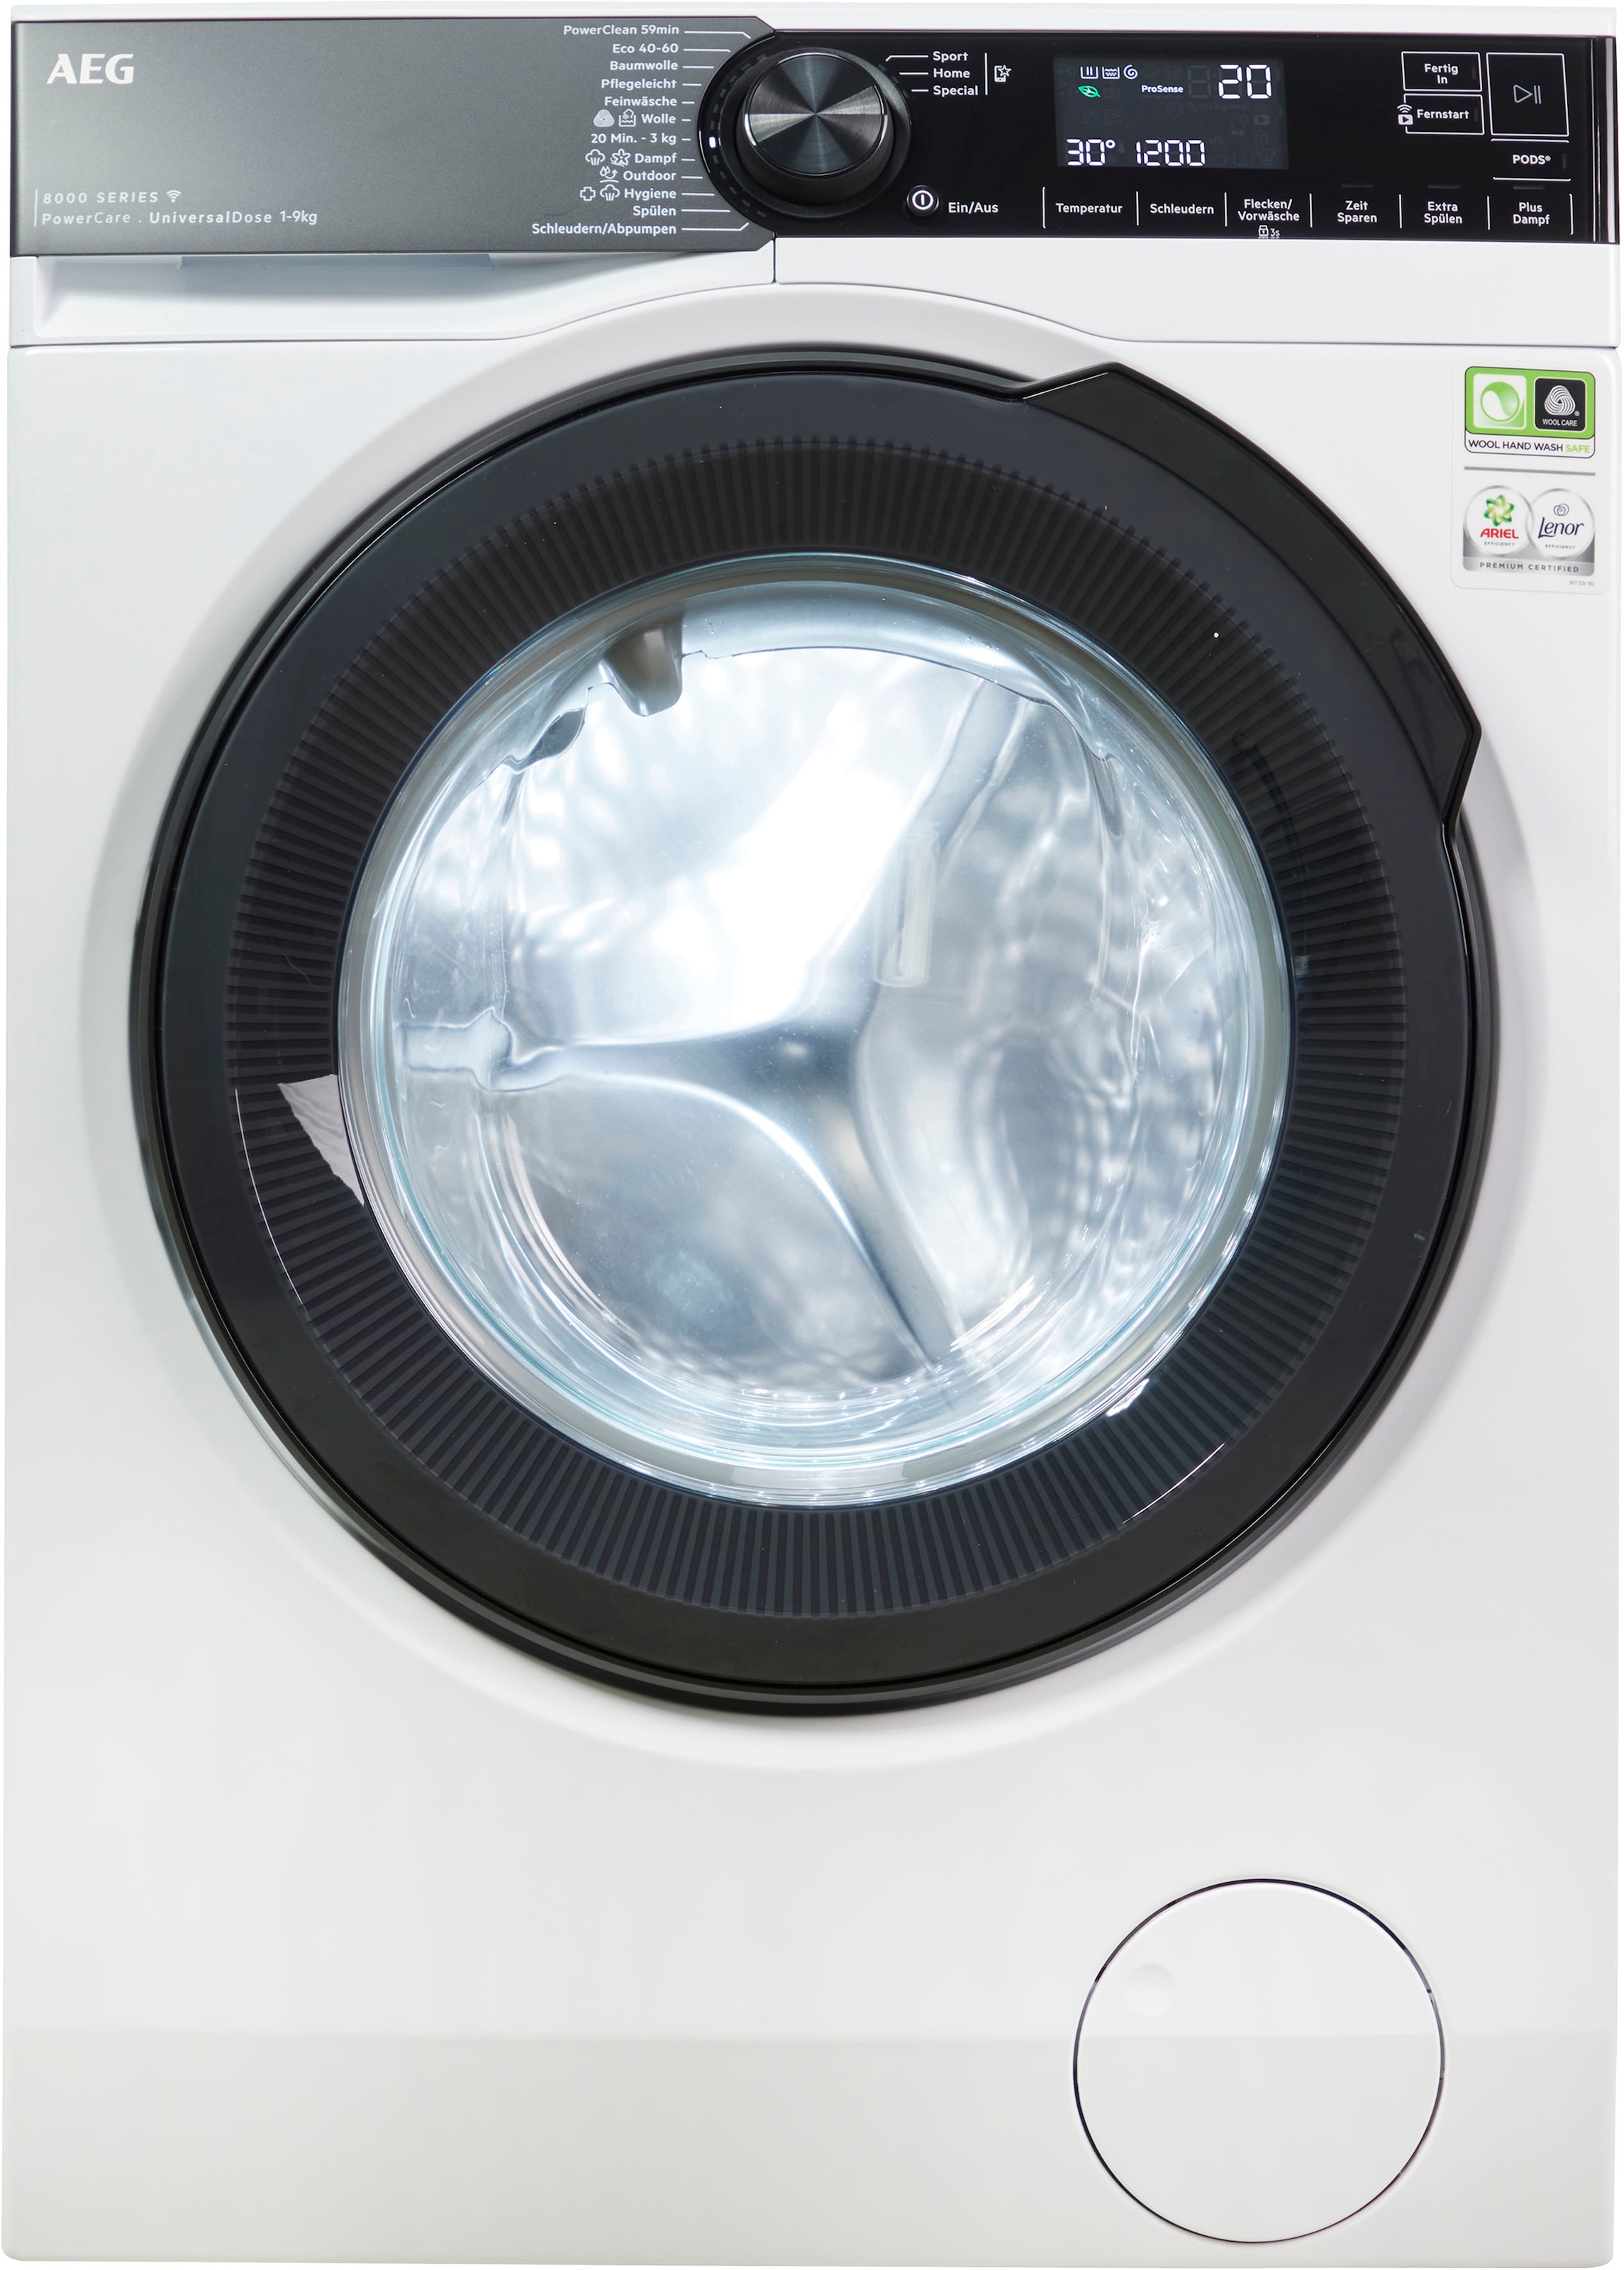 AEG Waschmaschine Min. OTTO PowerClean 59 nur 9 Fleckenentfernung »LR8E75490«, 30 in online U/min, PowerCare, °C kg, bei 1400 LR8E75490, 8000 Wifi bei - 